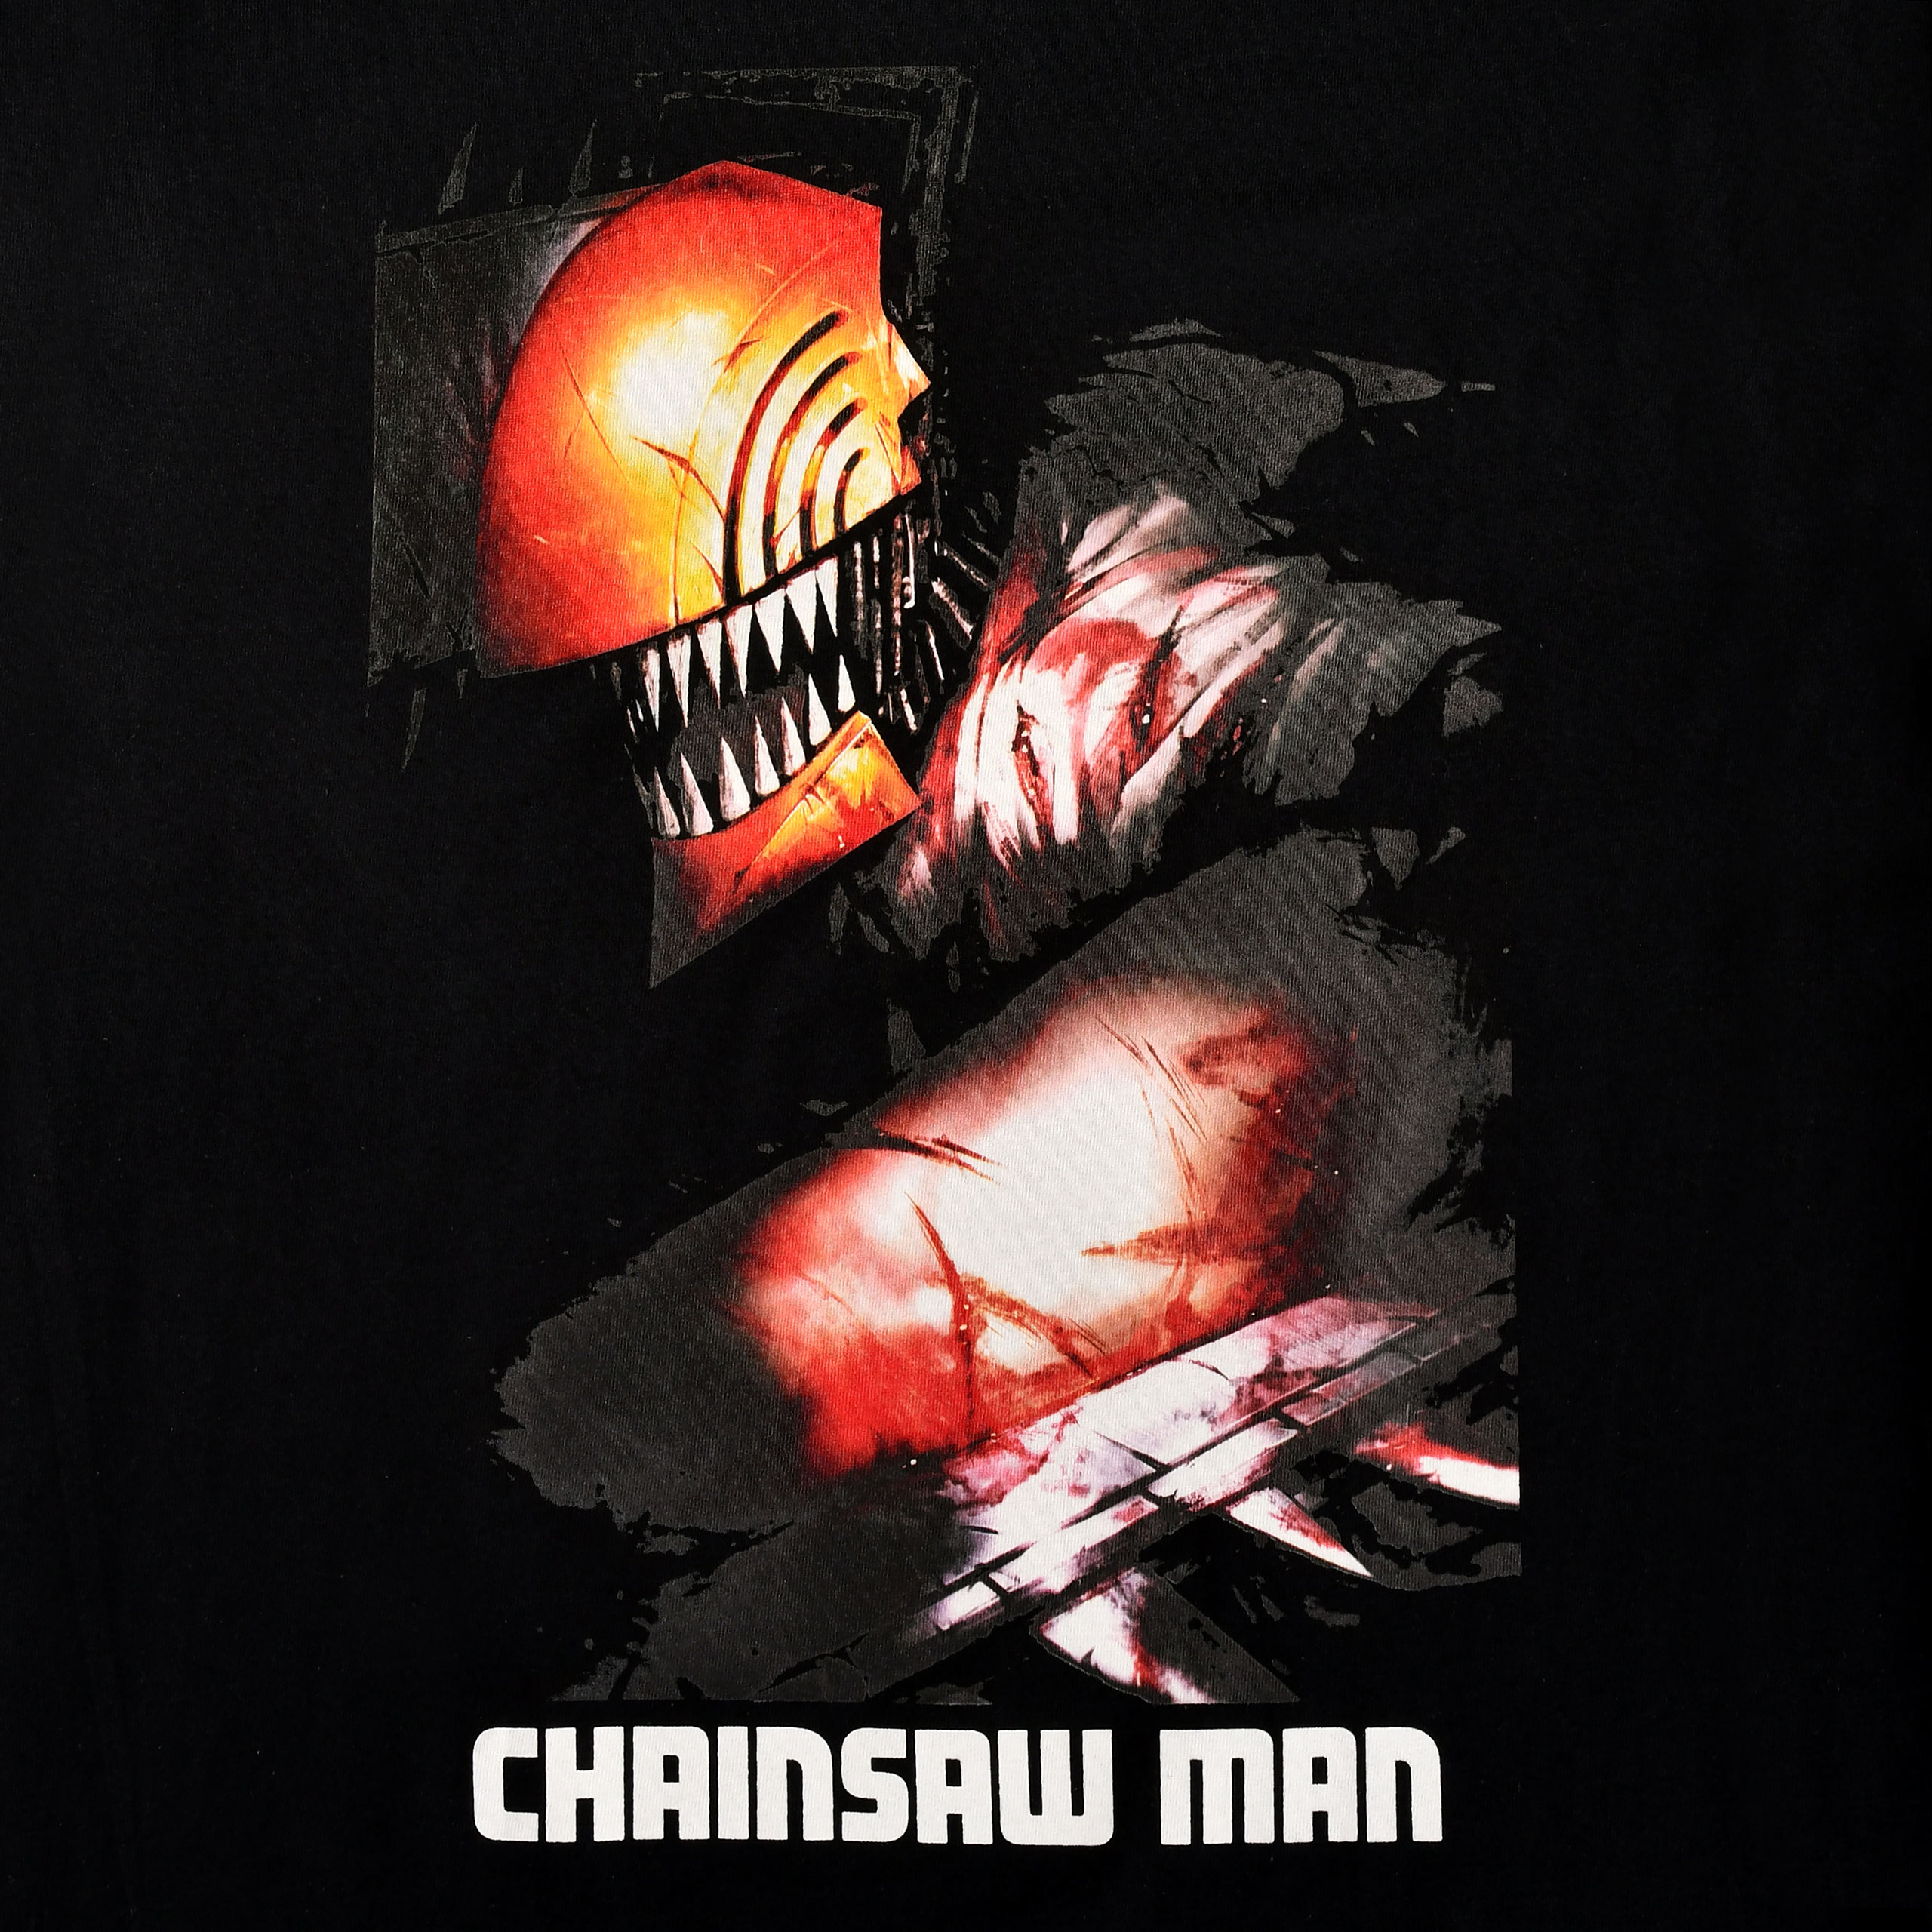 Chainsaw Man - Core Graphic T-Shirt black